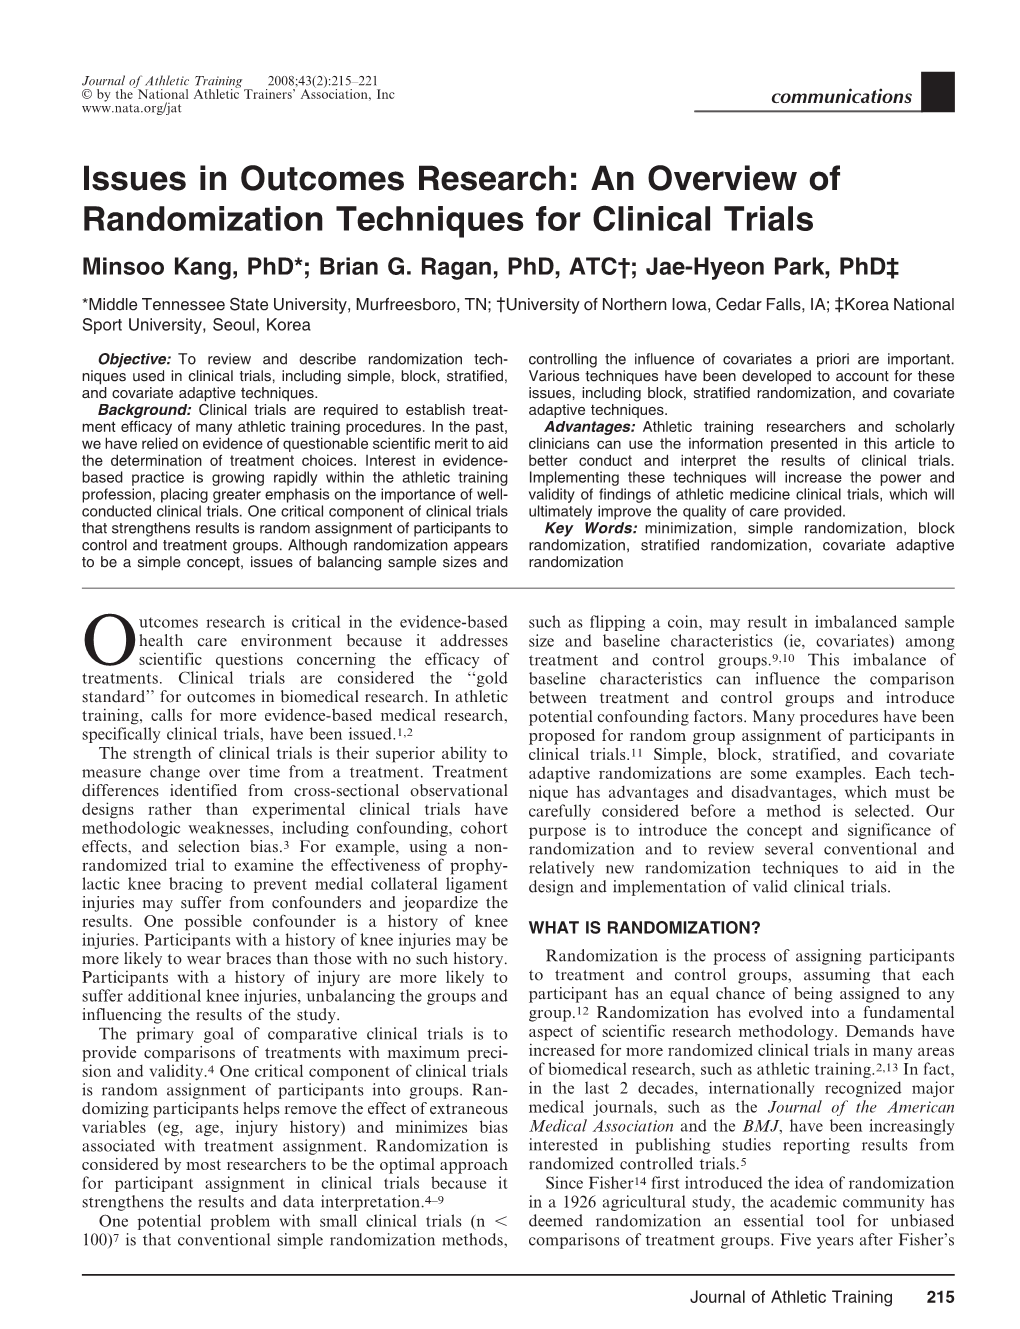 An Overview of Randomization Techniques for Clinical Trials Minsoo Kang, Phd*; Brian G